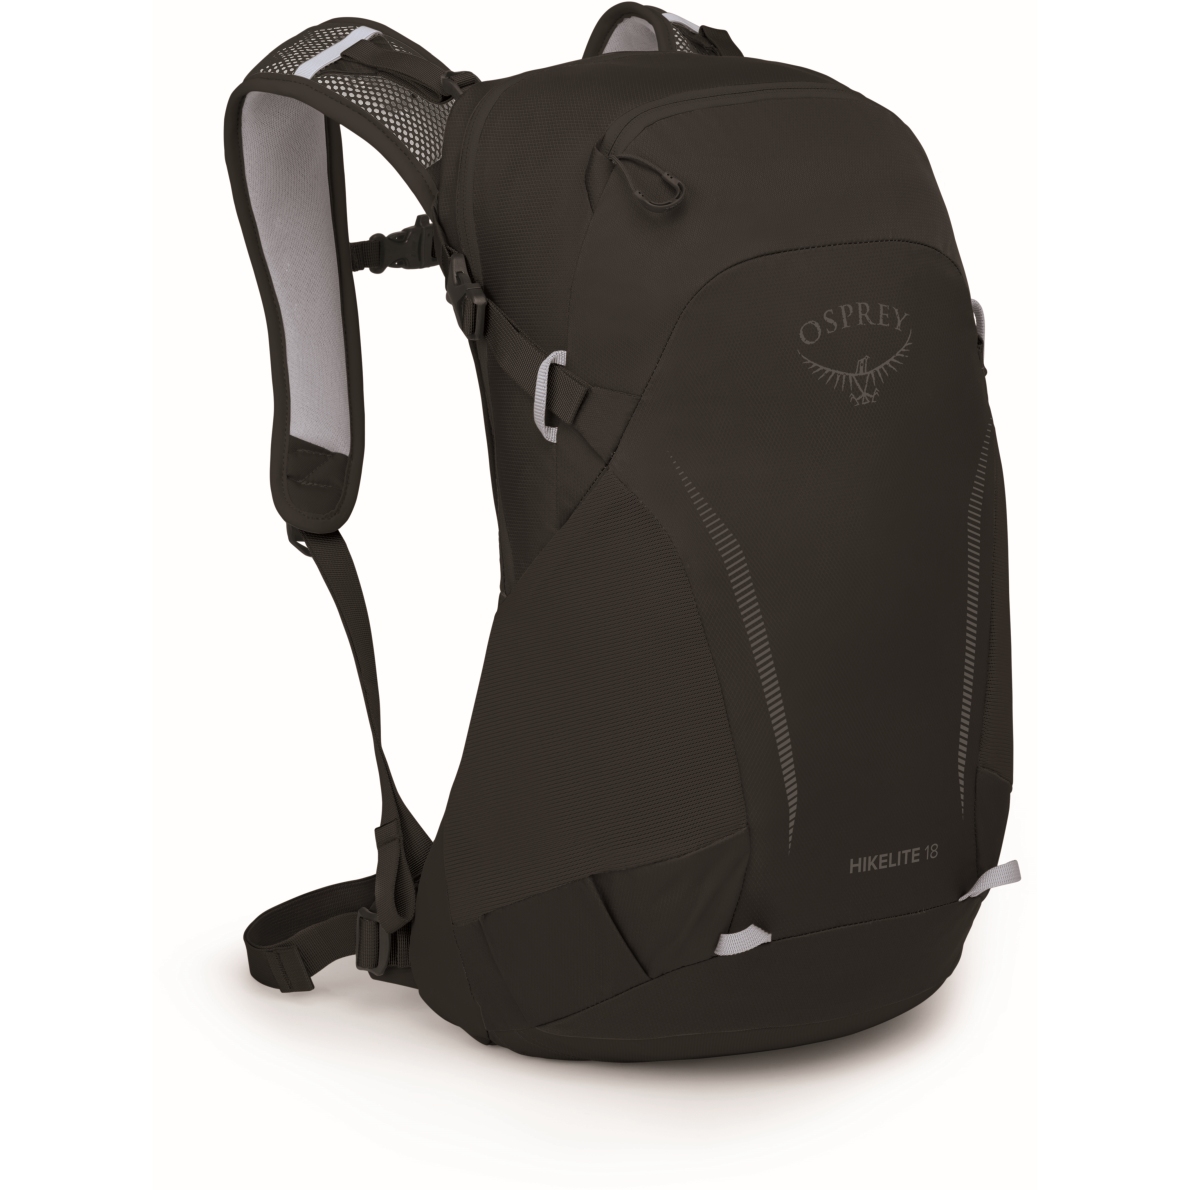 Image of Osprey Hikelite 18 Backpack - Black